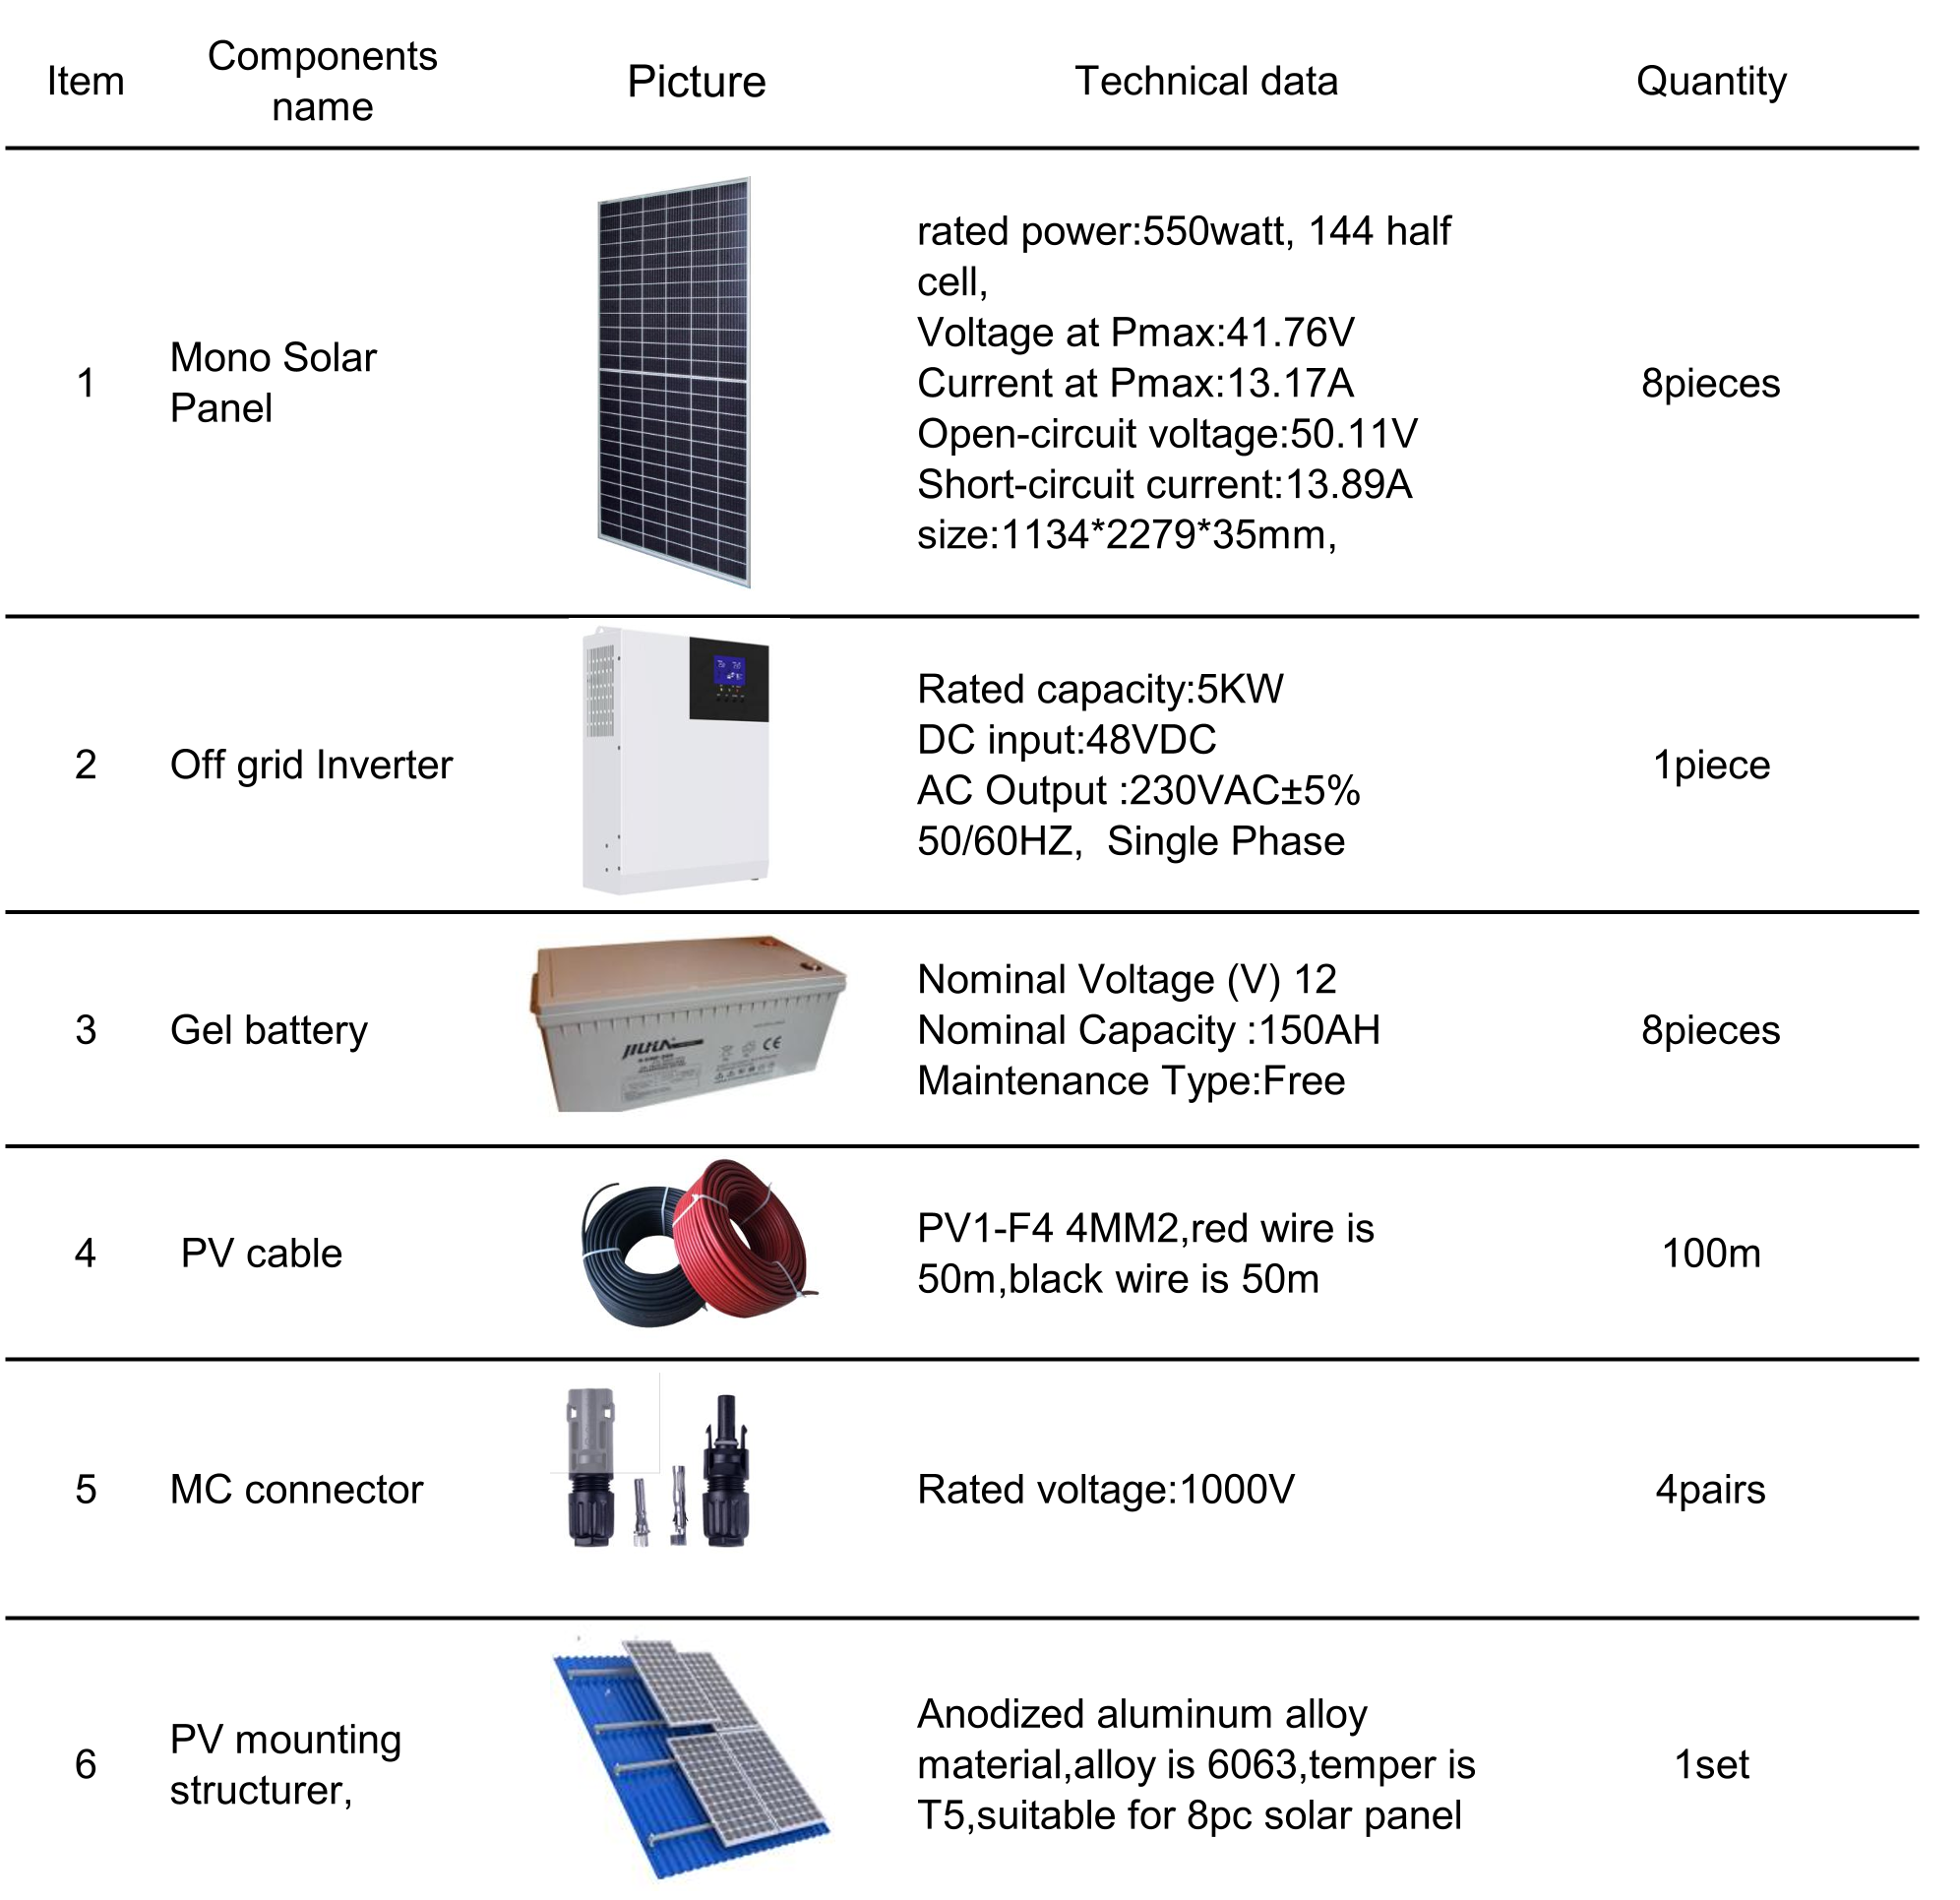 Edobo solar off grid 5kw with mono Solar Panel reliable quality solar power system